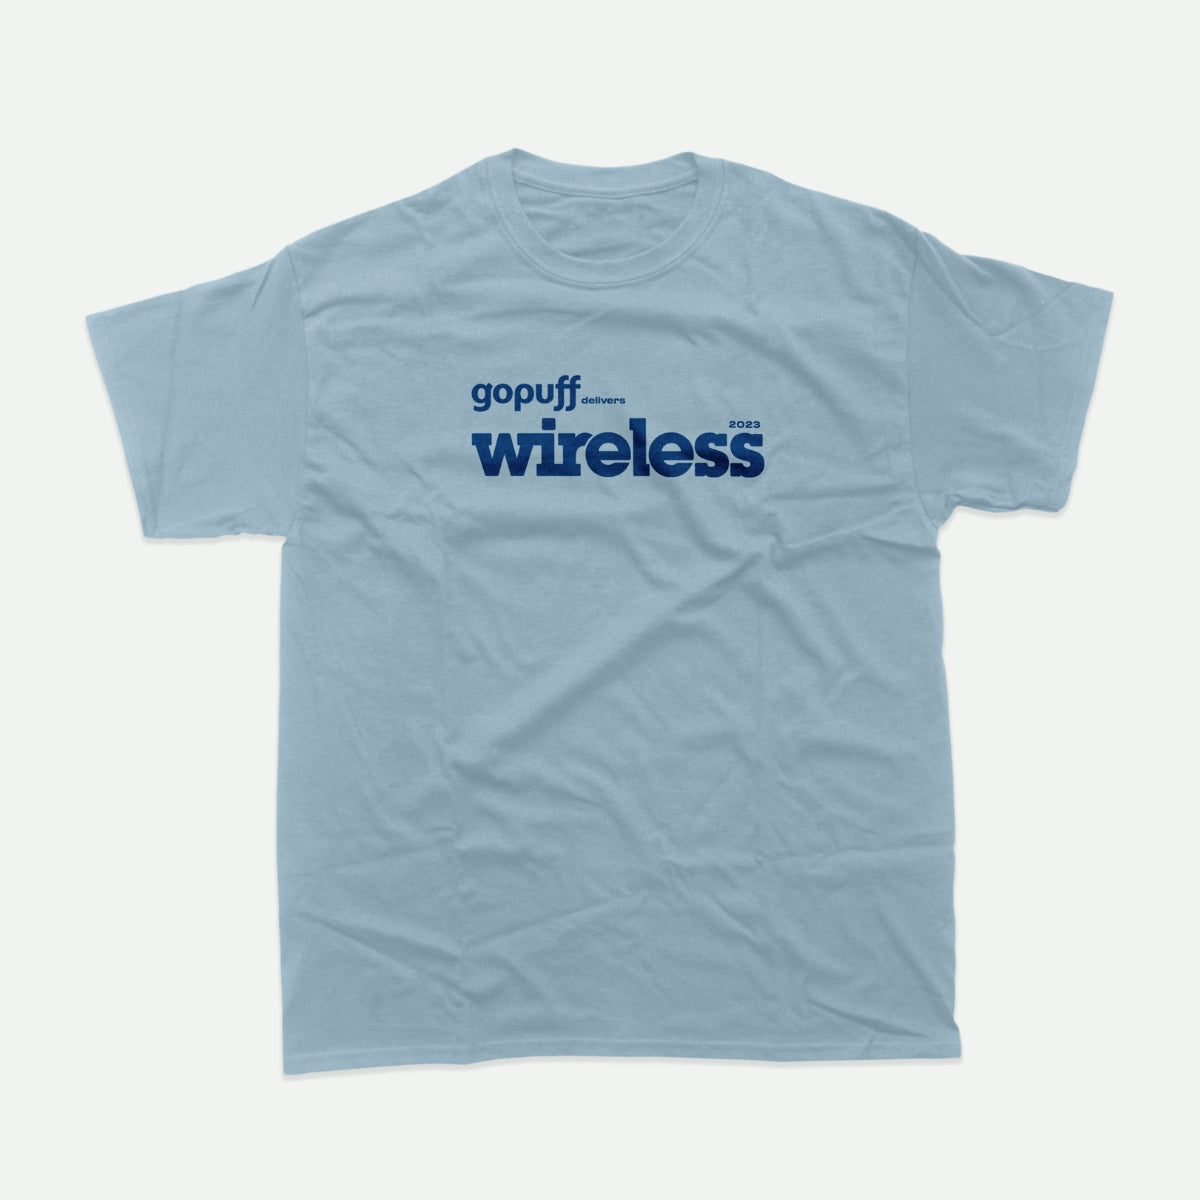 Hanes Smooth Comfort Women's Wireless T-Shirt Bra with Moisture Wicking  White 2XL 